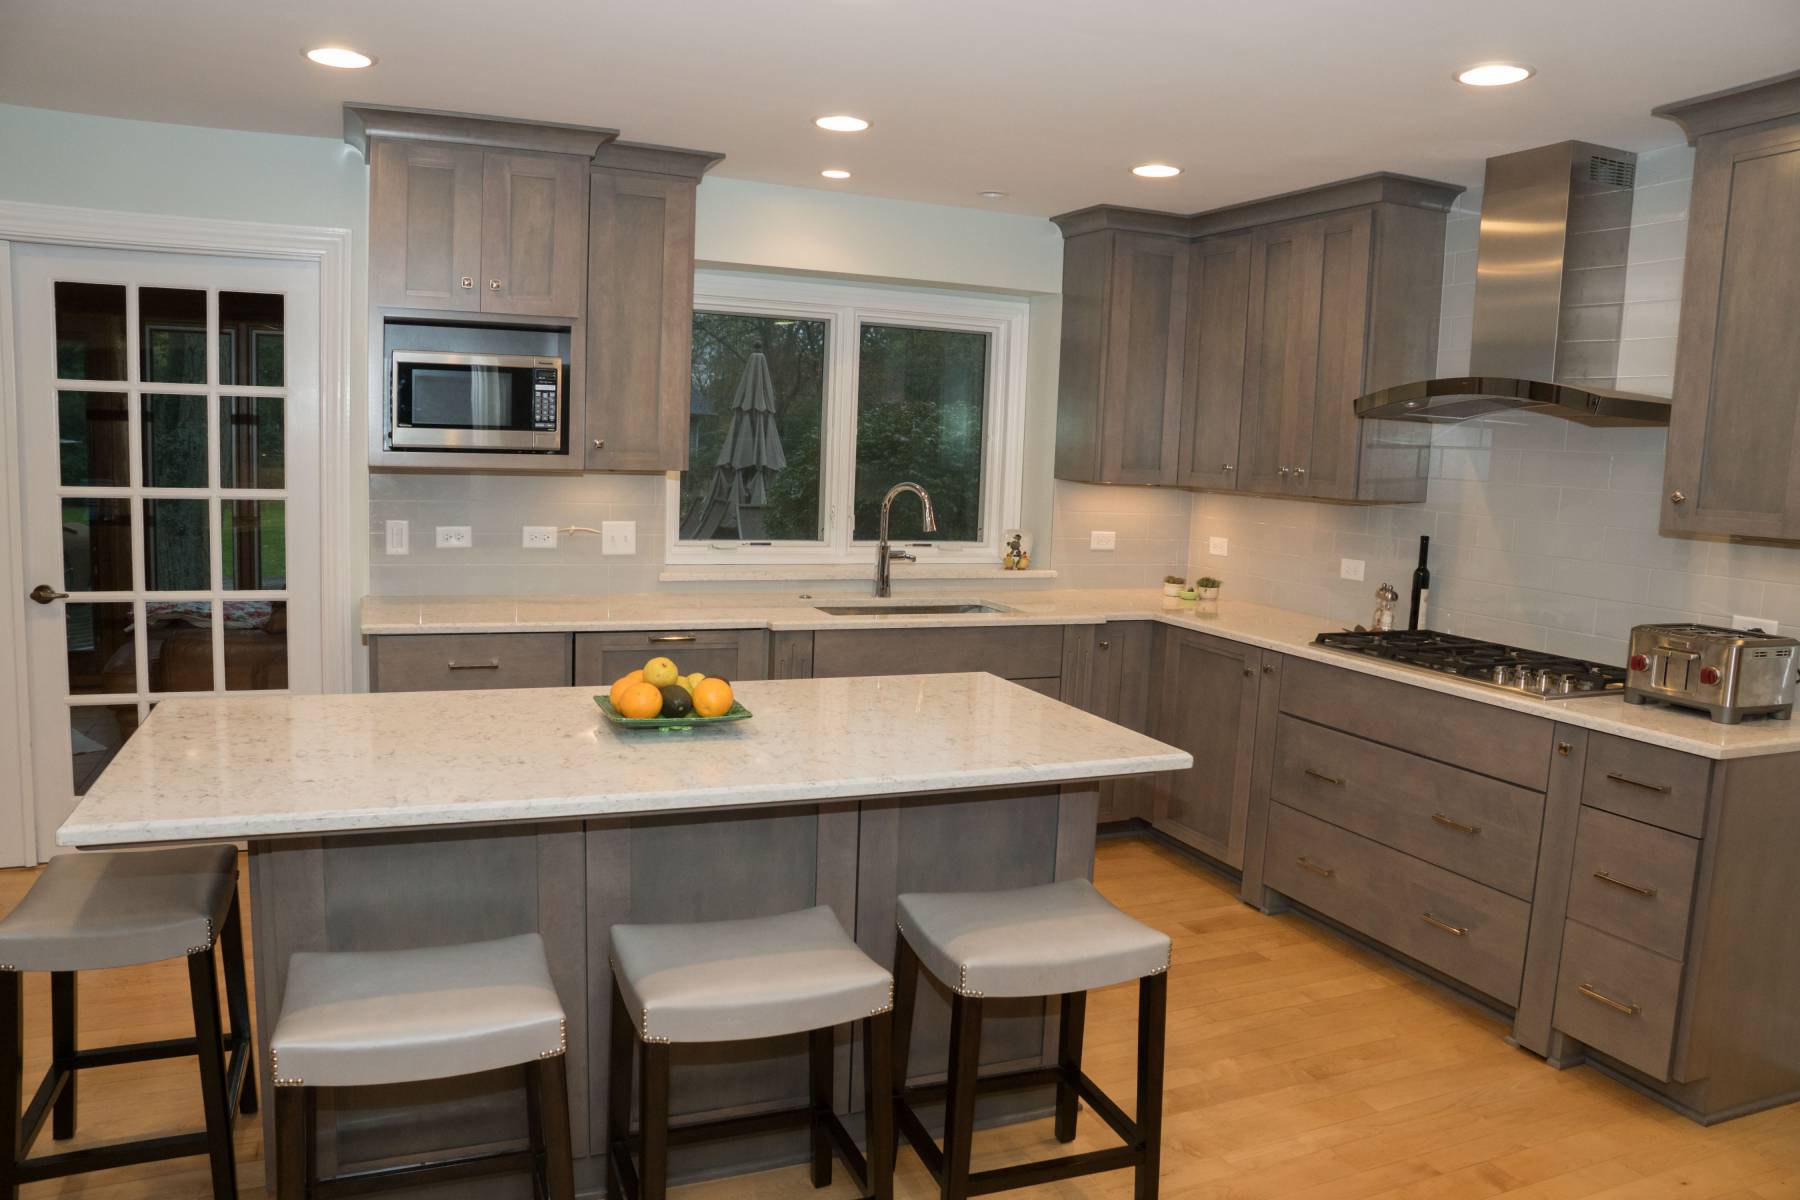 Modern grey kitchen range with stainless steel hood